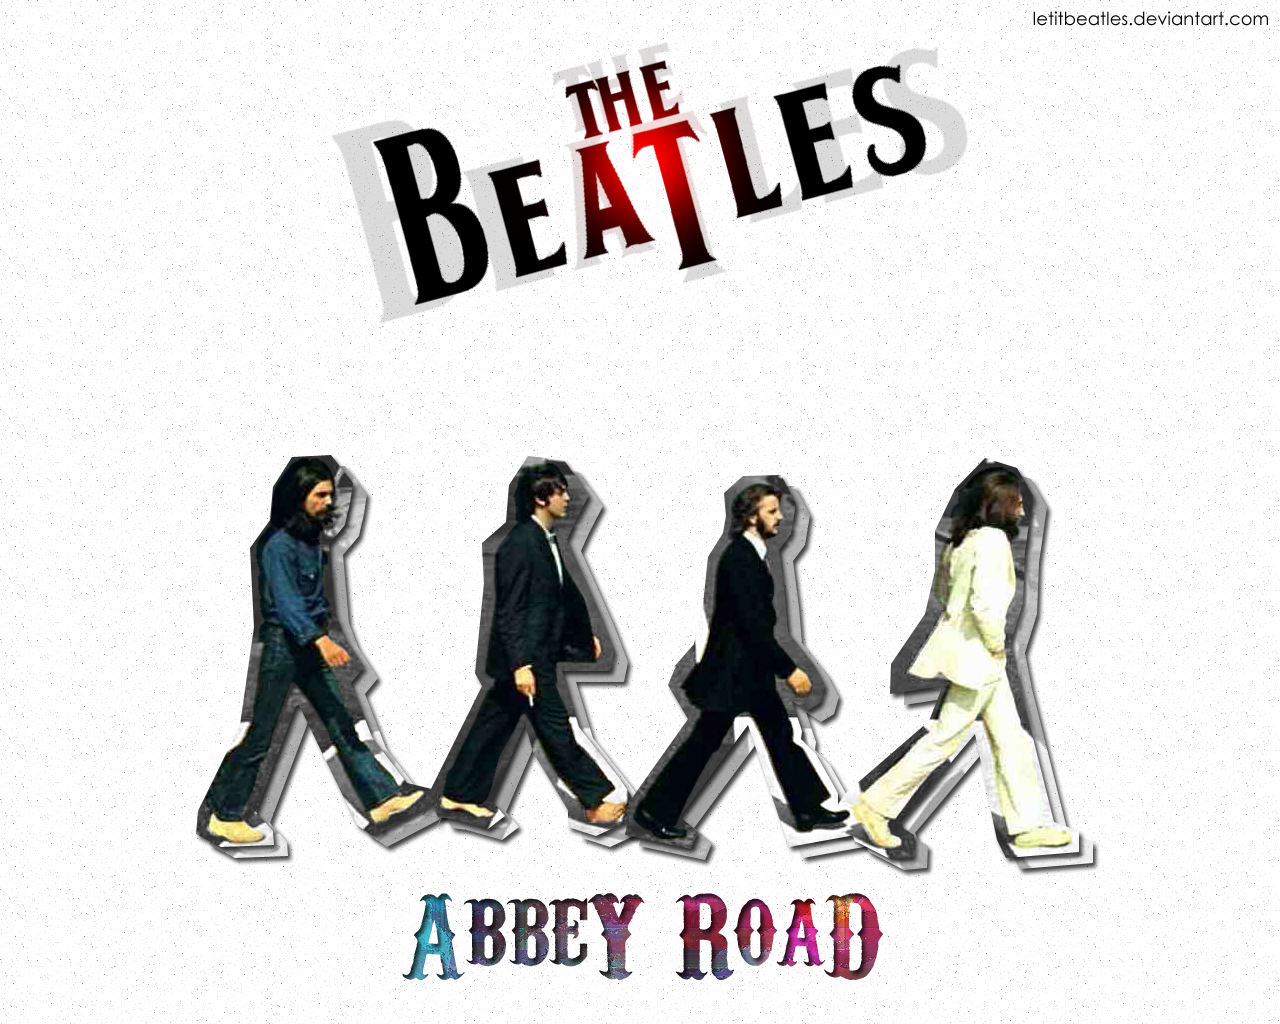 The Beatles Wallpaper By Letitbeatles On Deviantart